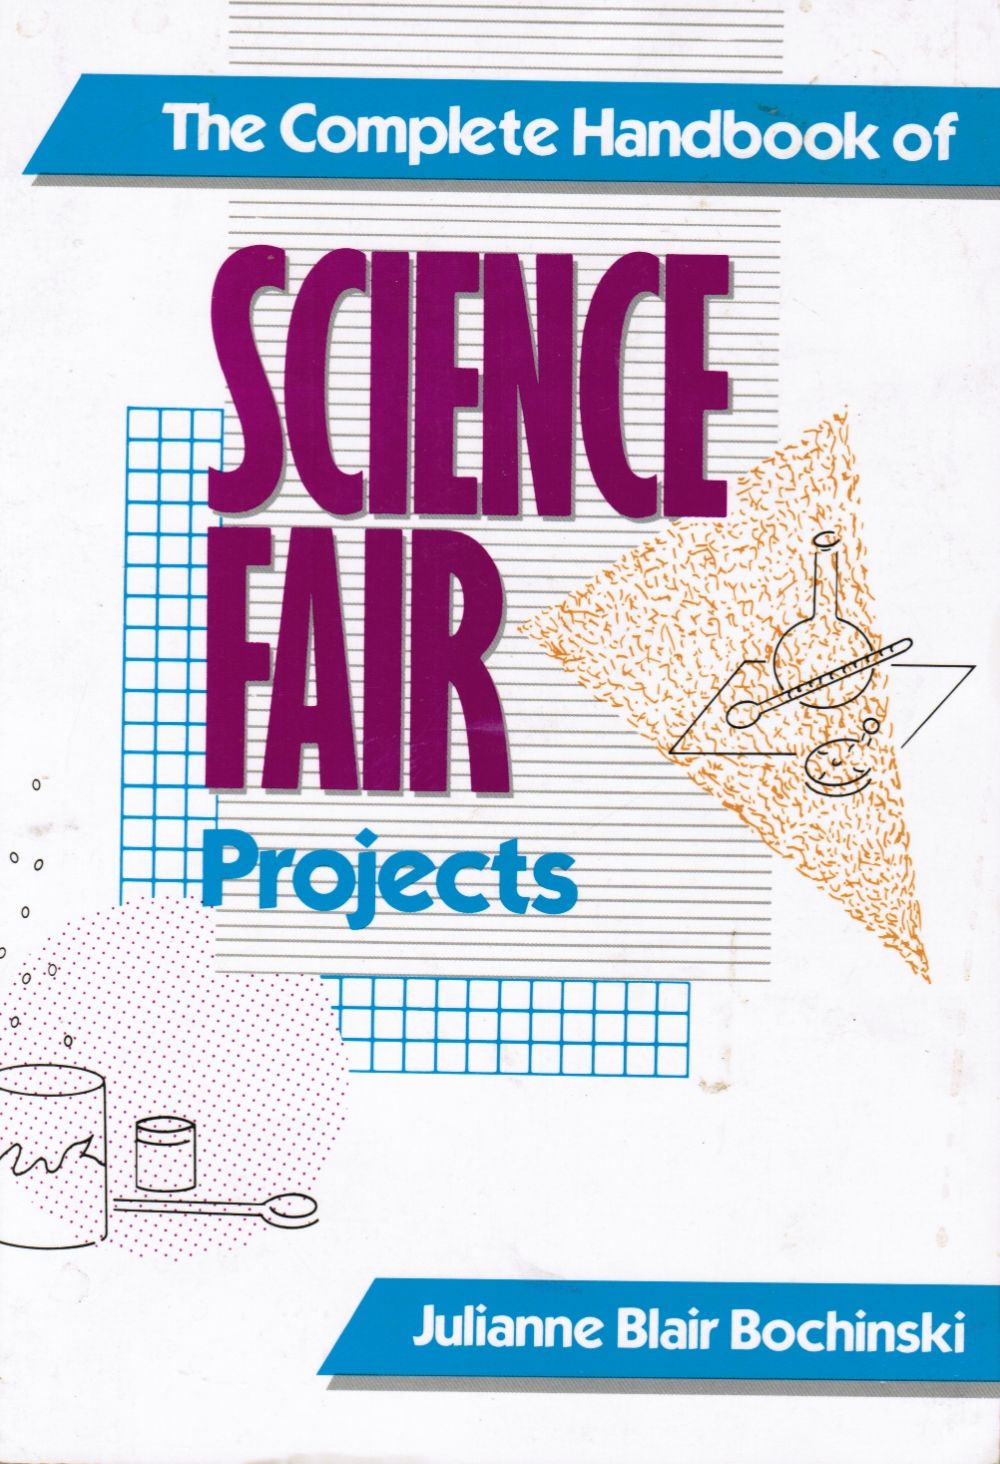 BOCHINSKI, JULIANNE BLAIR - The Complete Handbook of Science Fair Projects